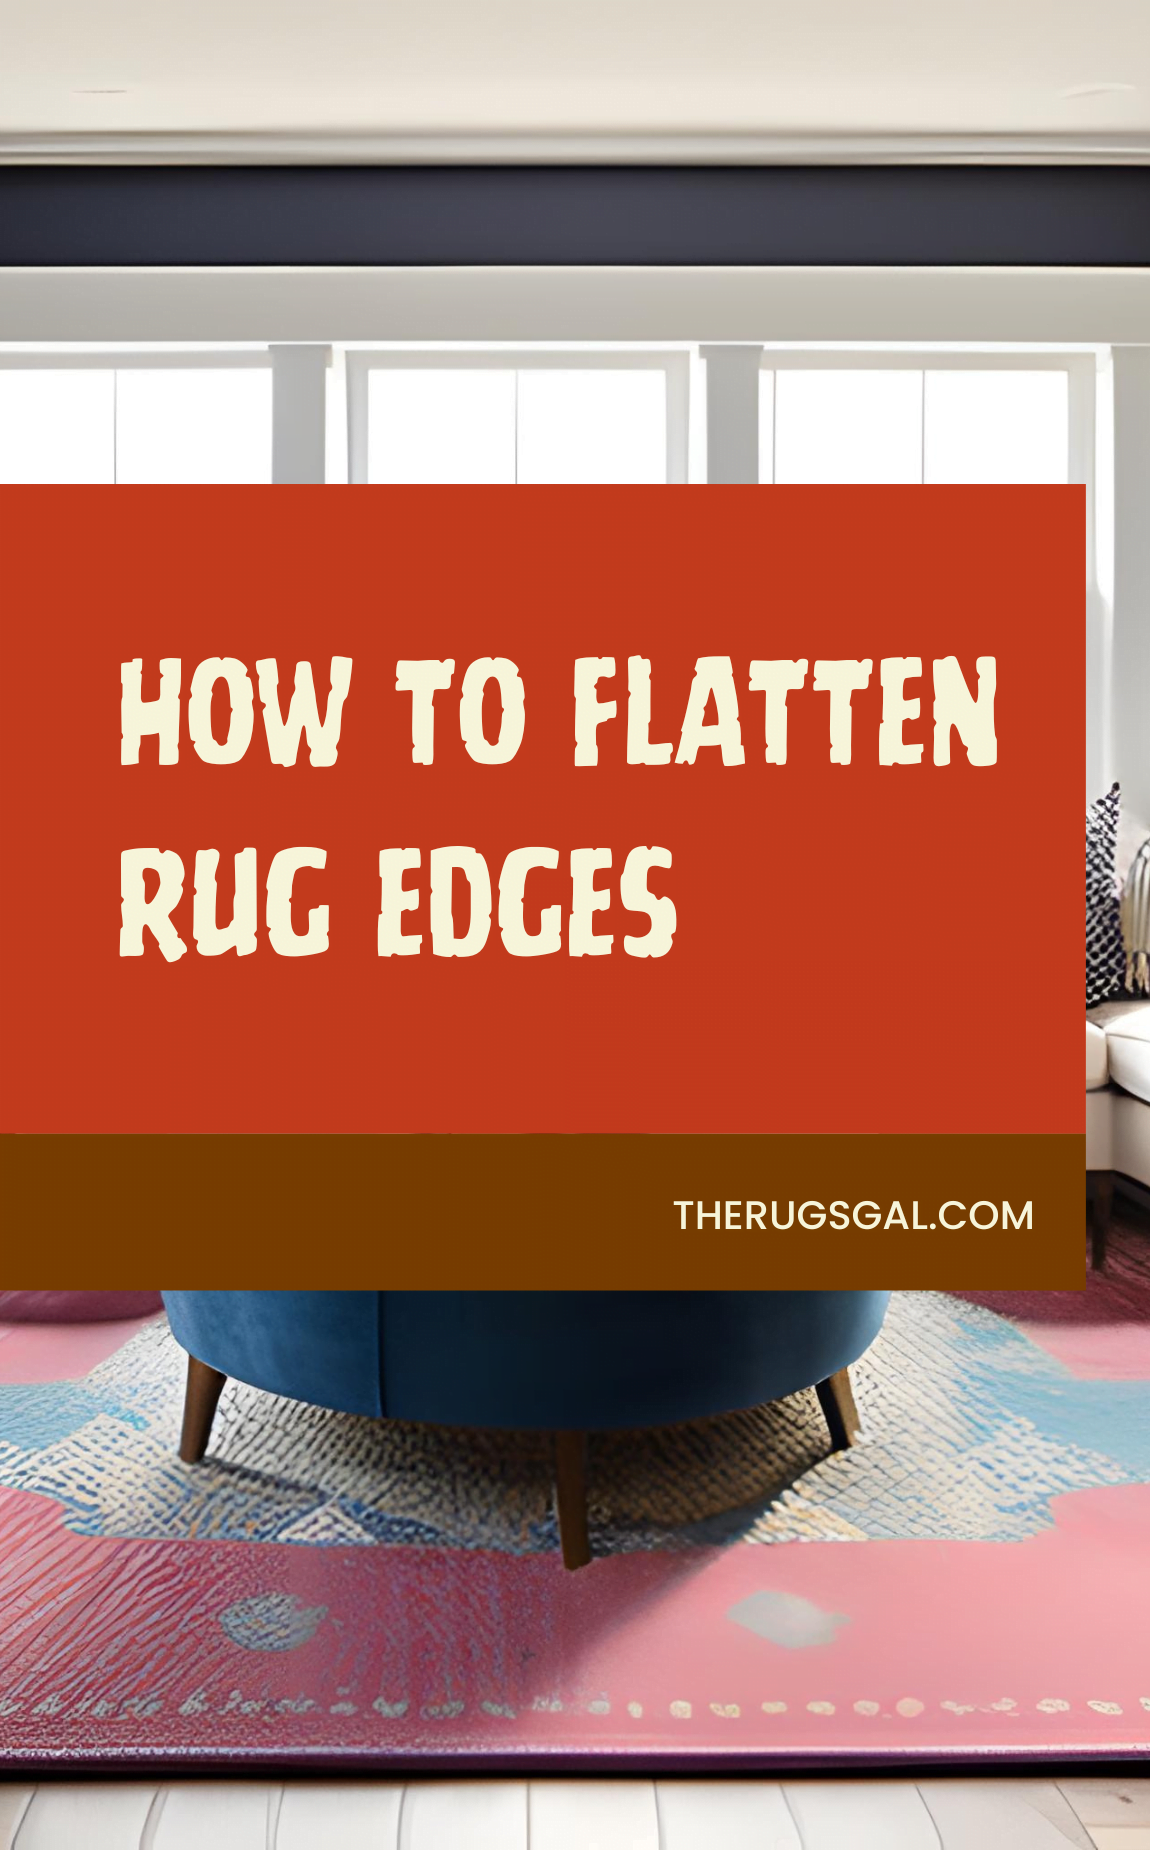 How to Flatten Rug Edges